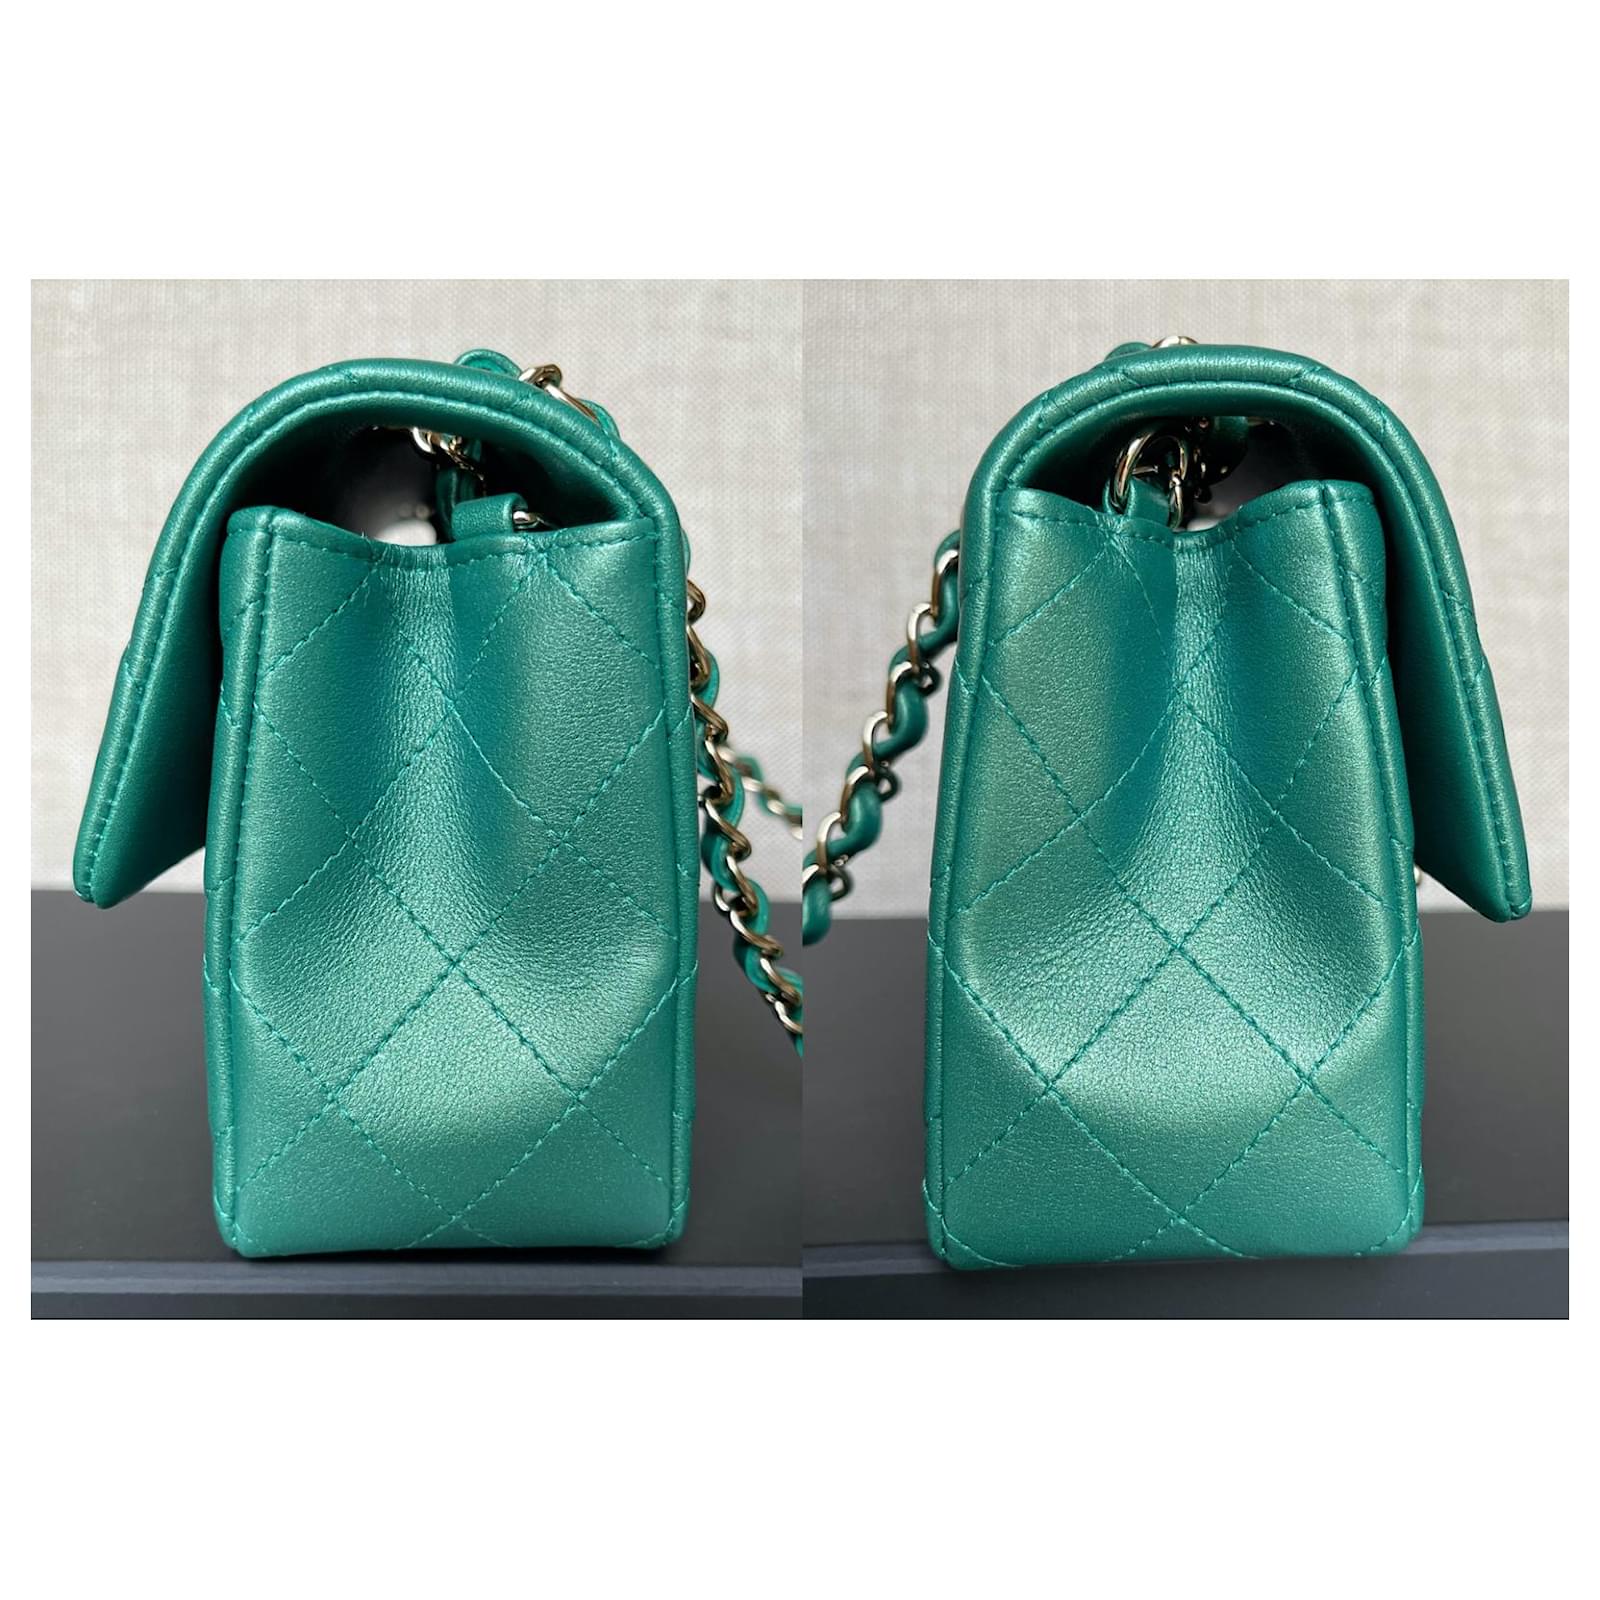 Chanel Green Iridescent Quilted Lambskin Rectangular Mini Flap Bag